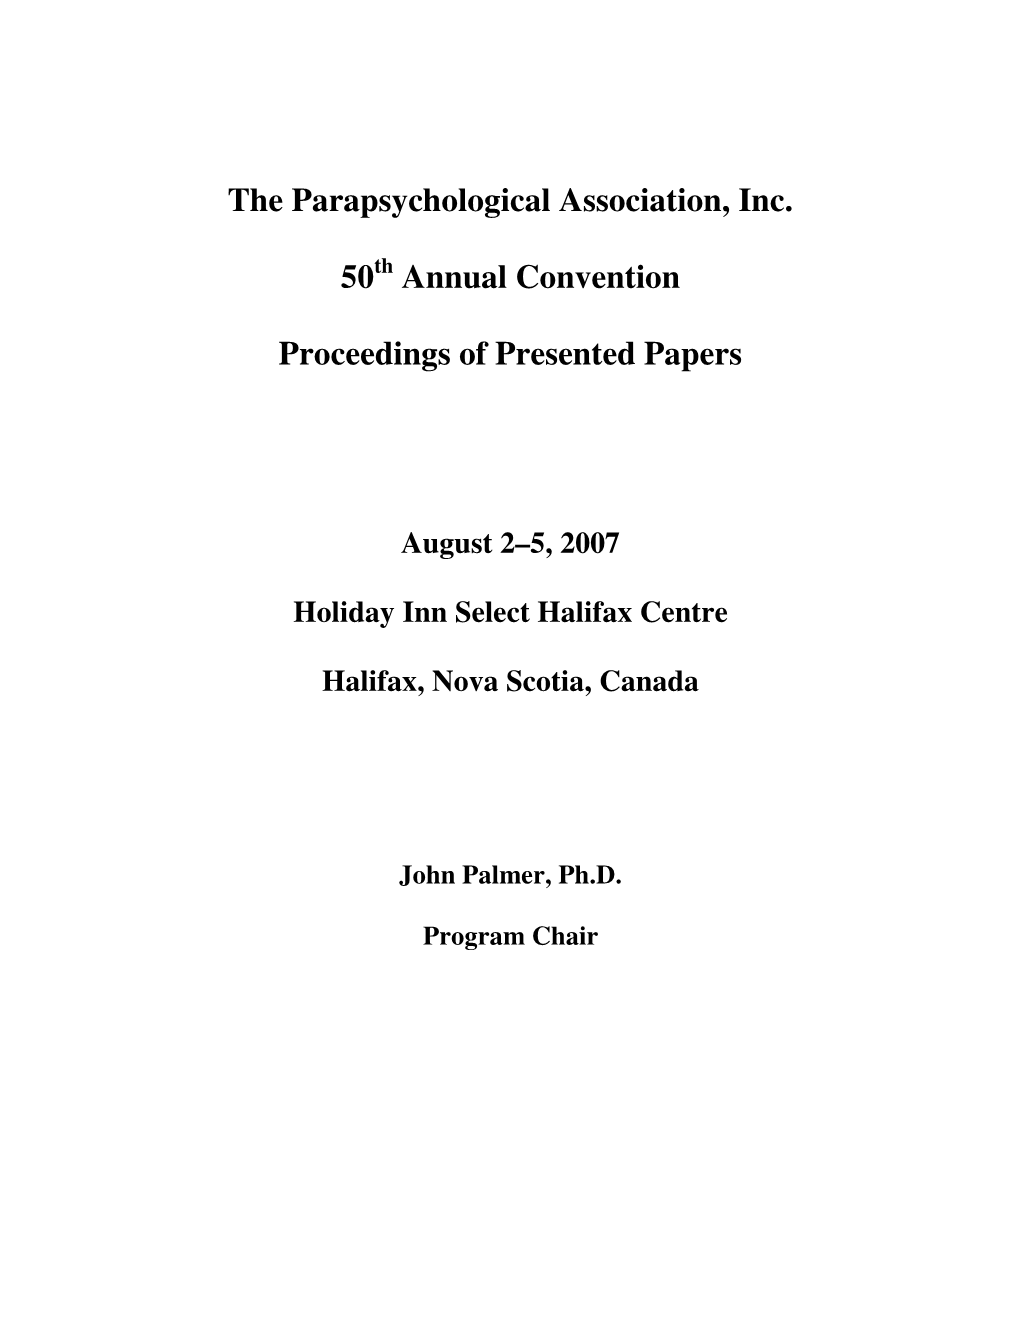 The Parapsychological Association, Inc. 50 Annual Convention